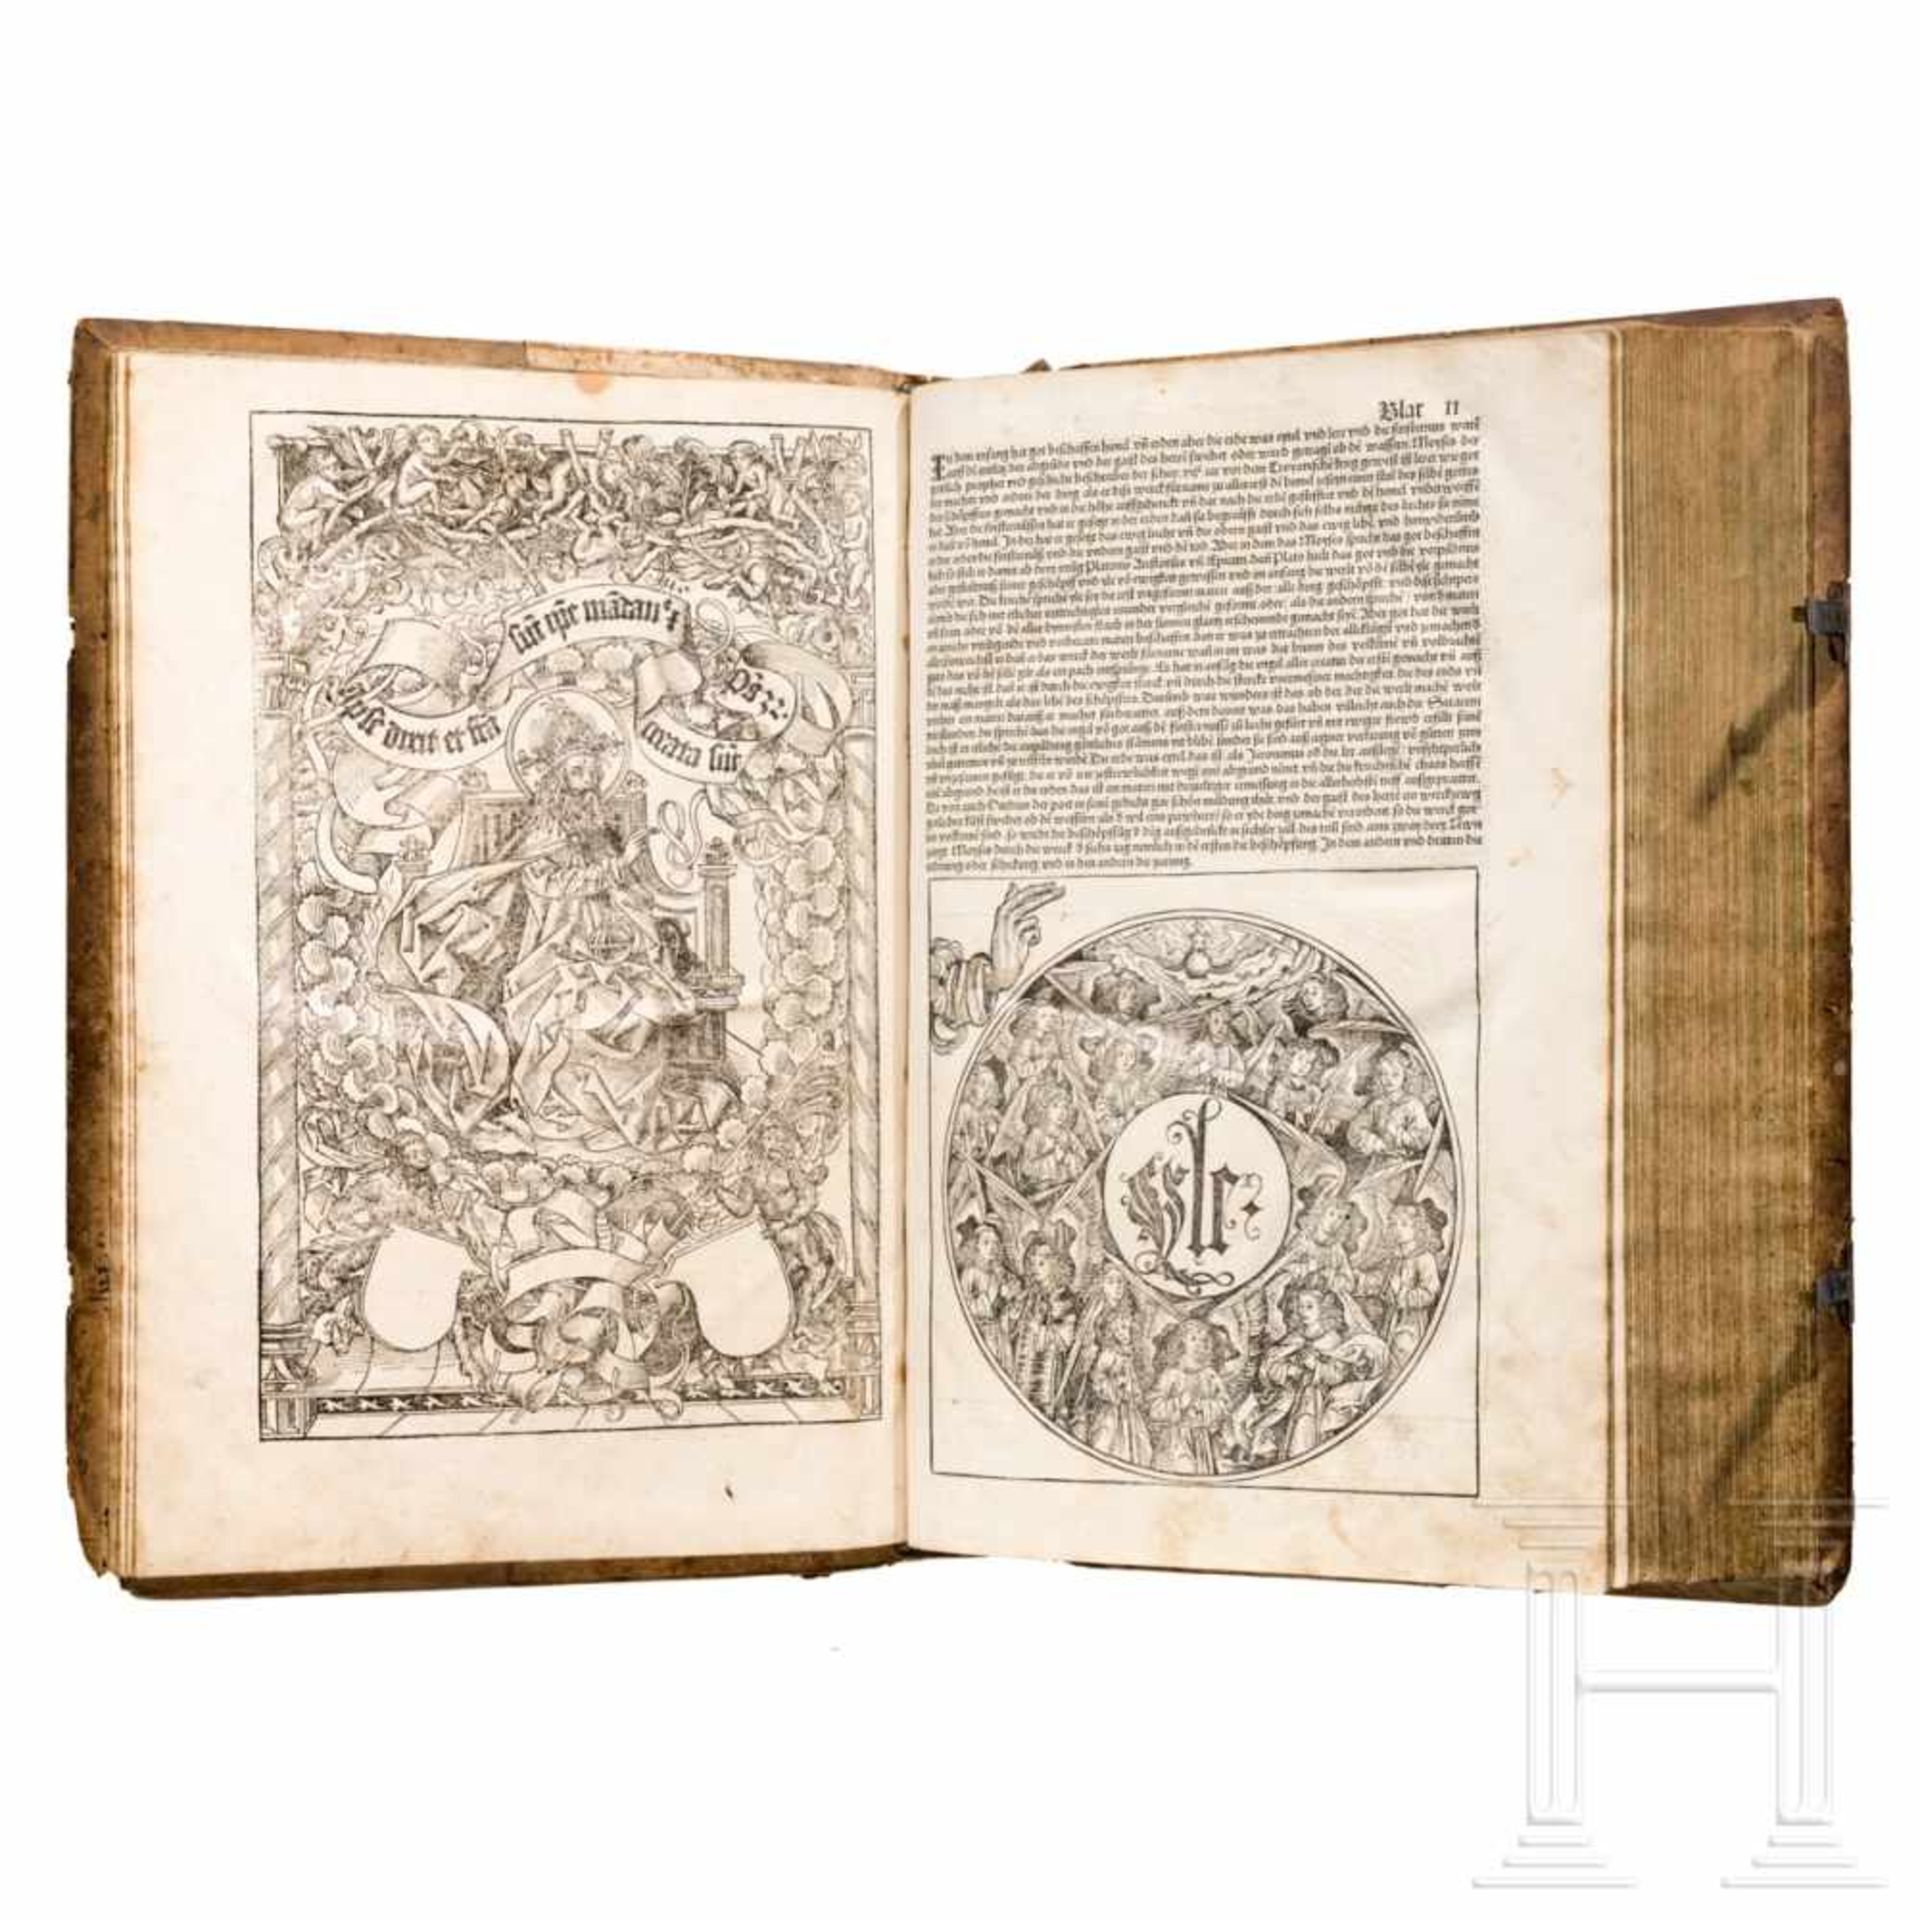 Hartmann Schedel, Das Buch der Chroniken, Nürnberg, A. Koberger, 1493 - Image 9 of 51